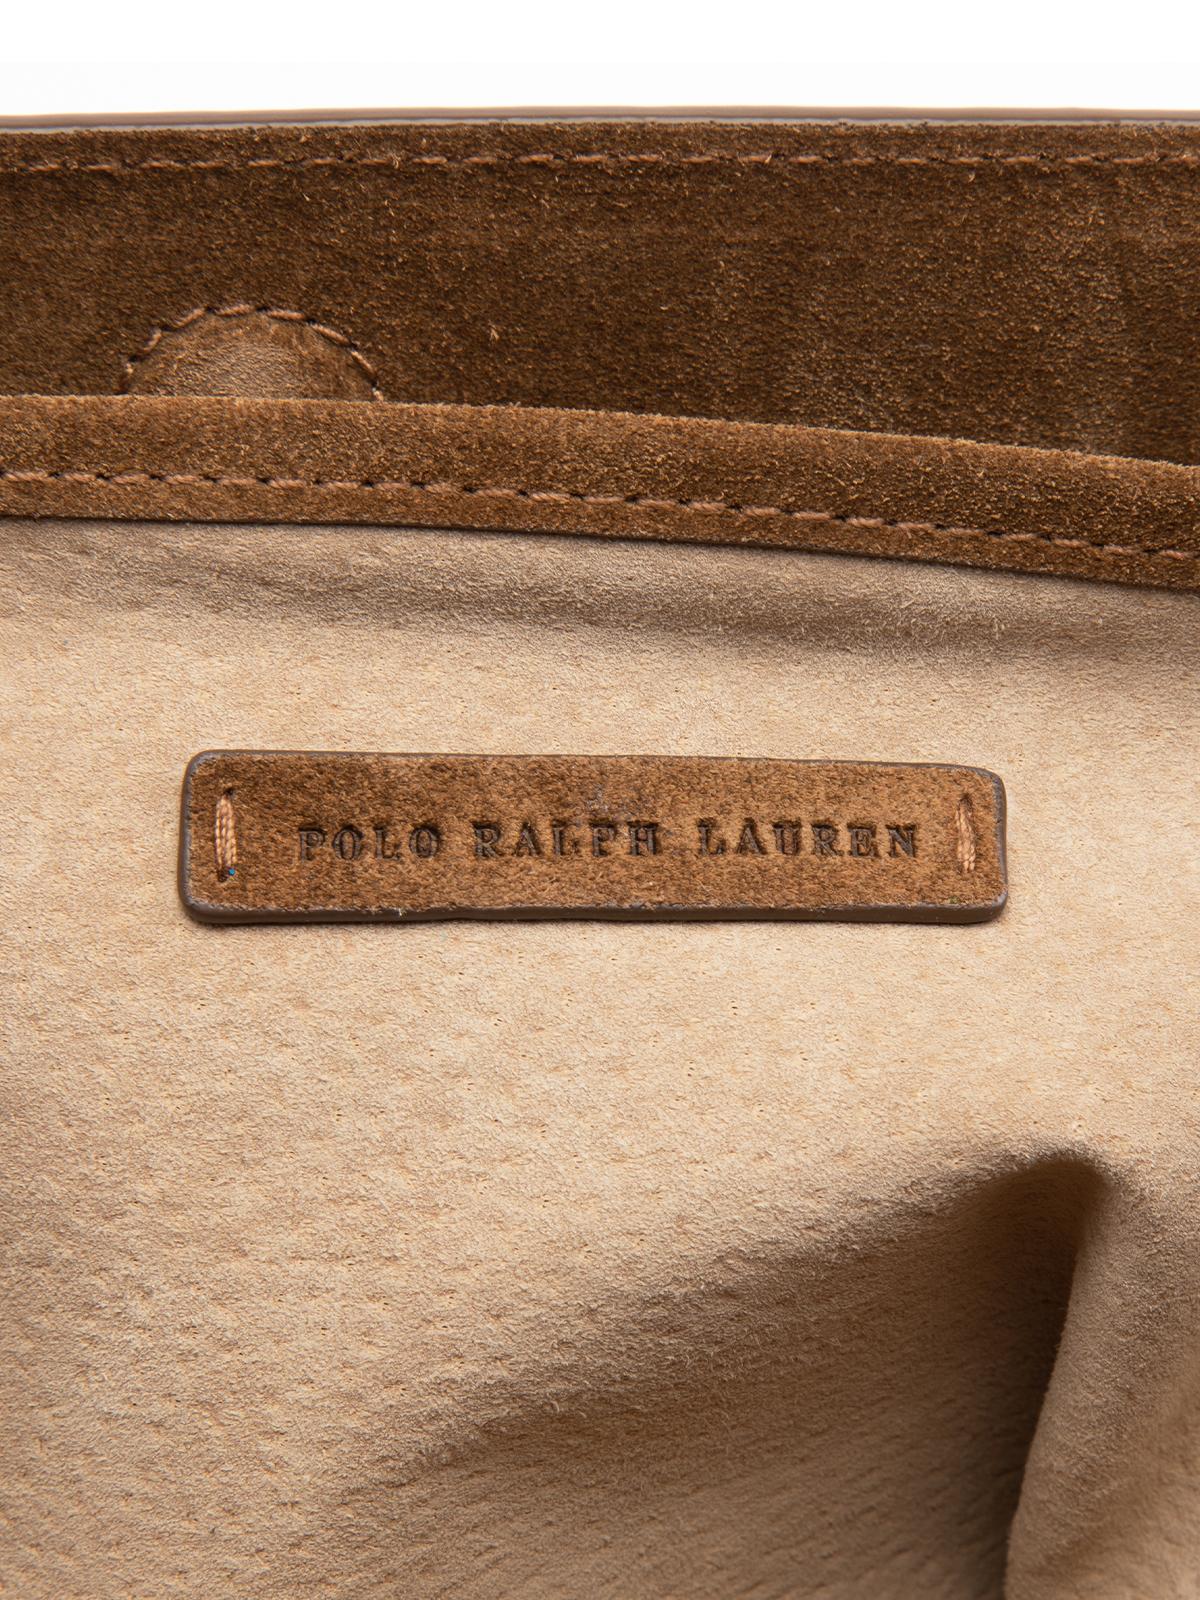 Pre-Loved Polo Ralph Lauren Women's Suede Braided Brown Shoulder Bag 2